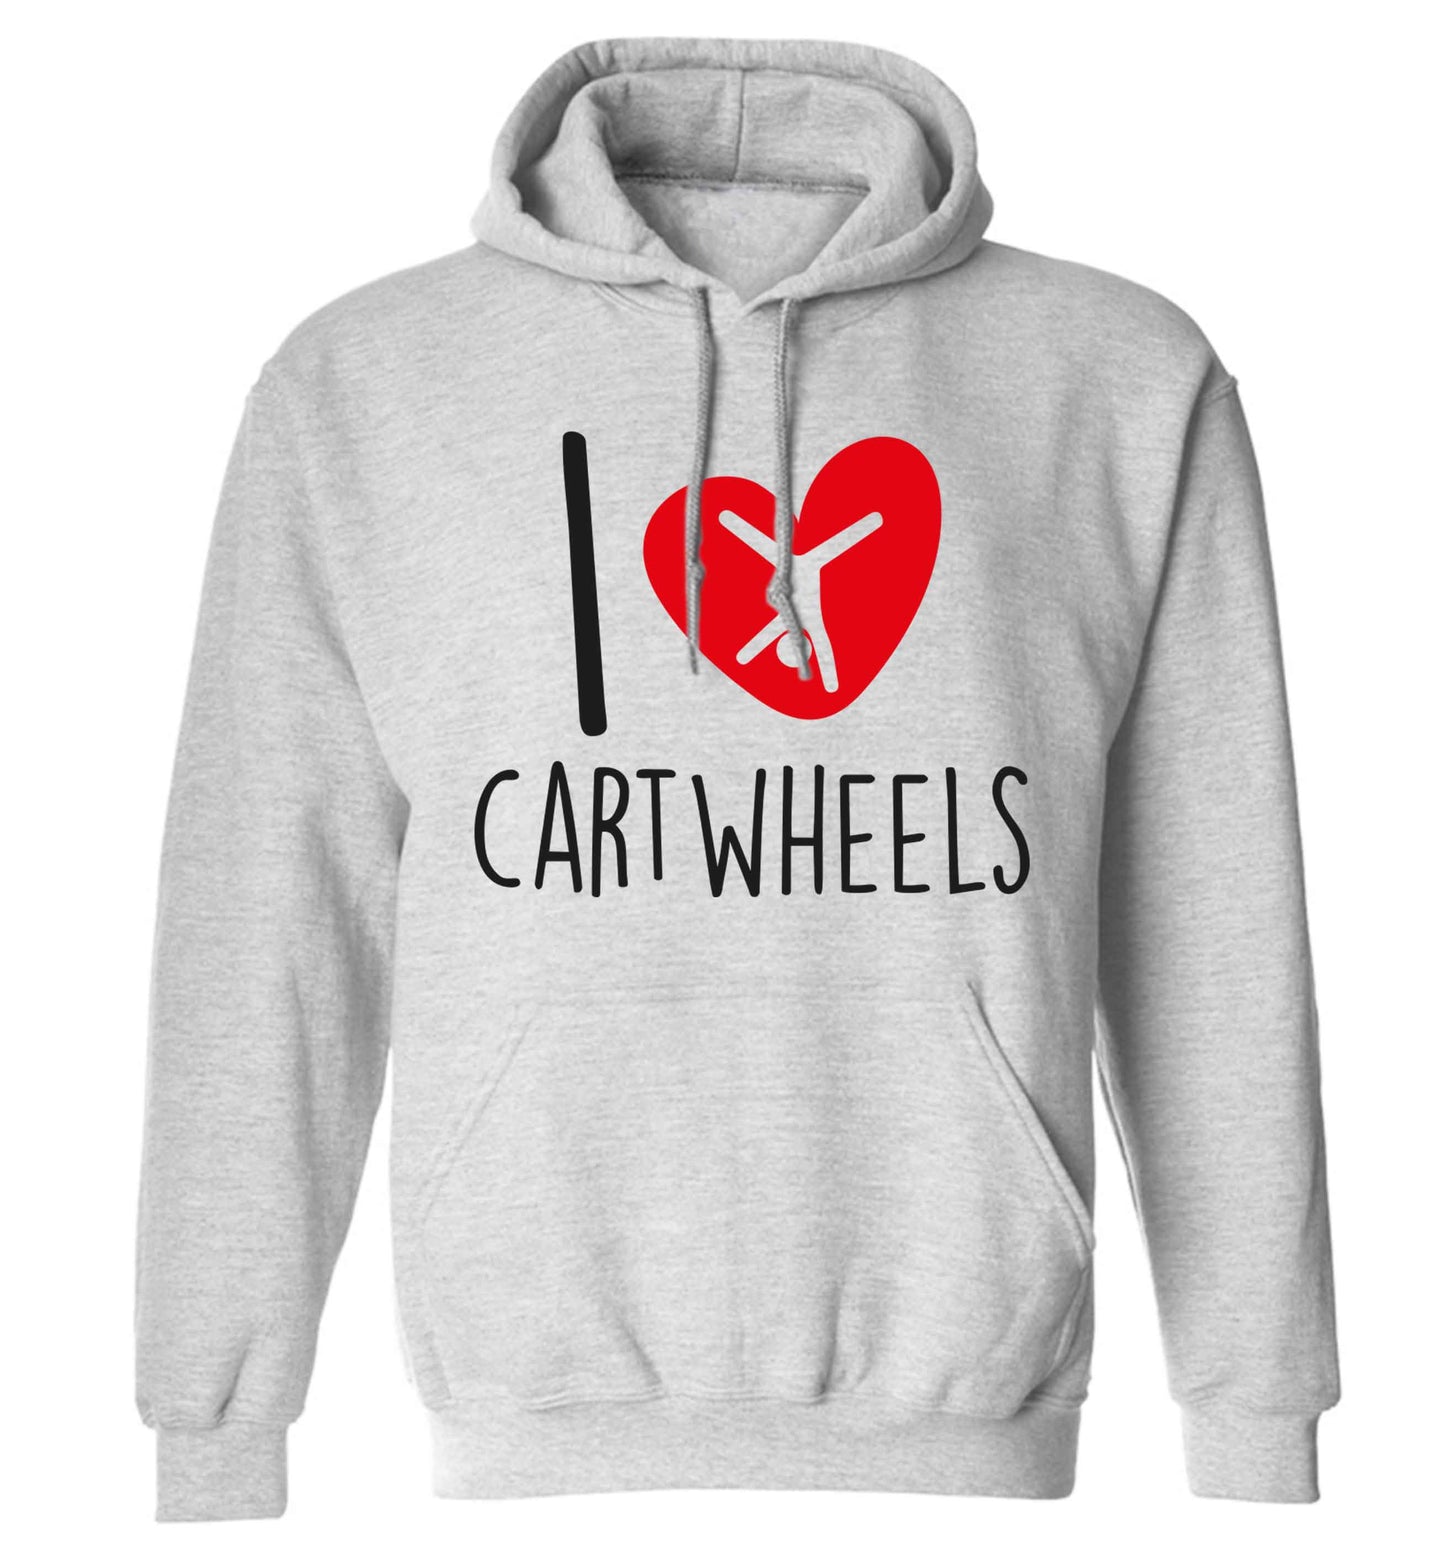 I love cartwheels adults unisex grey hoodie 2XL